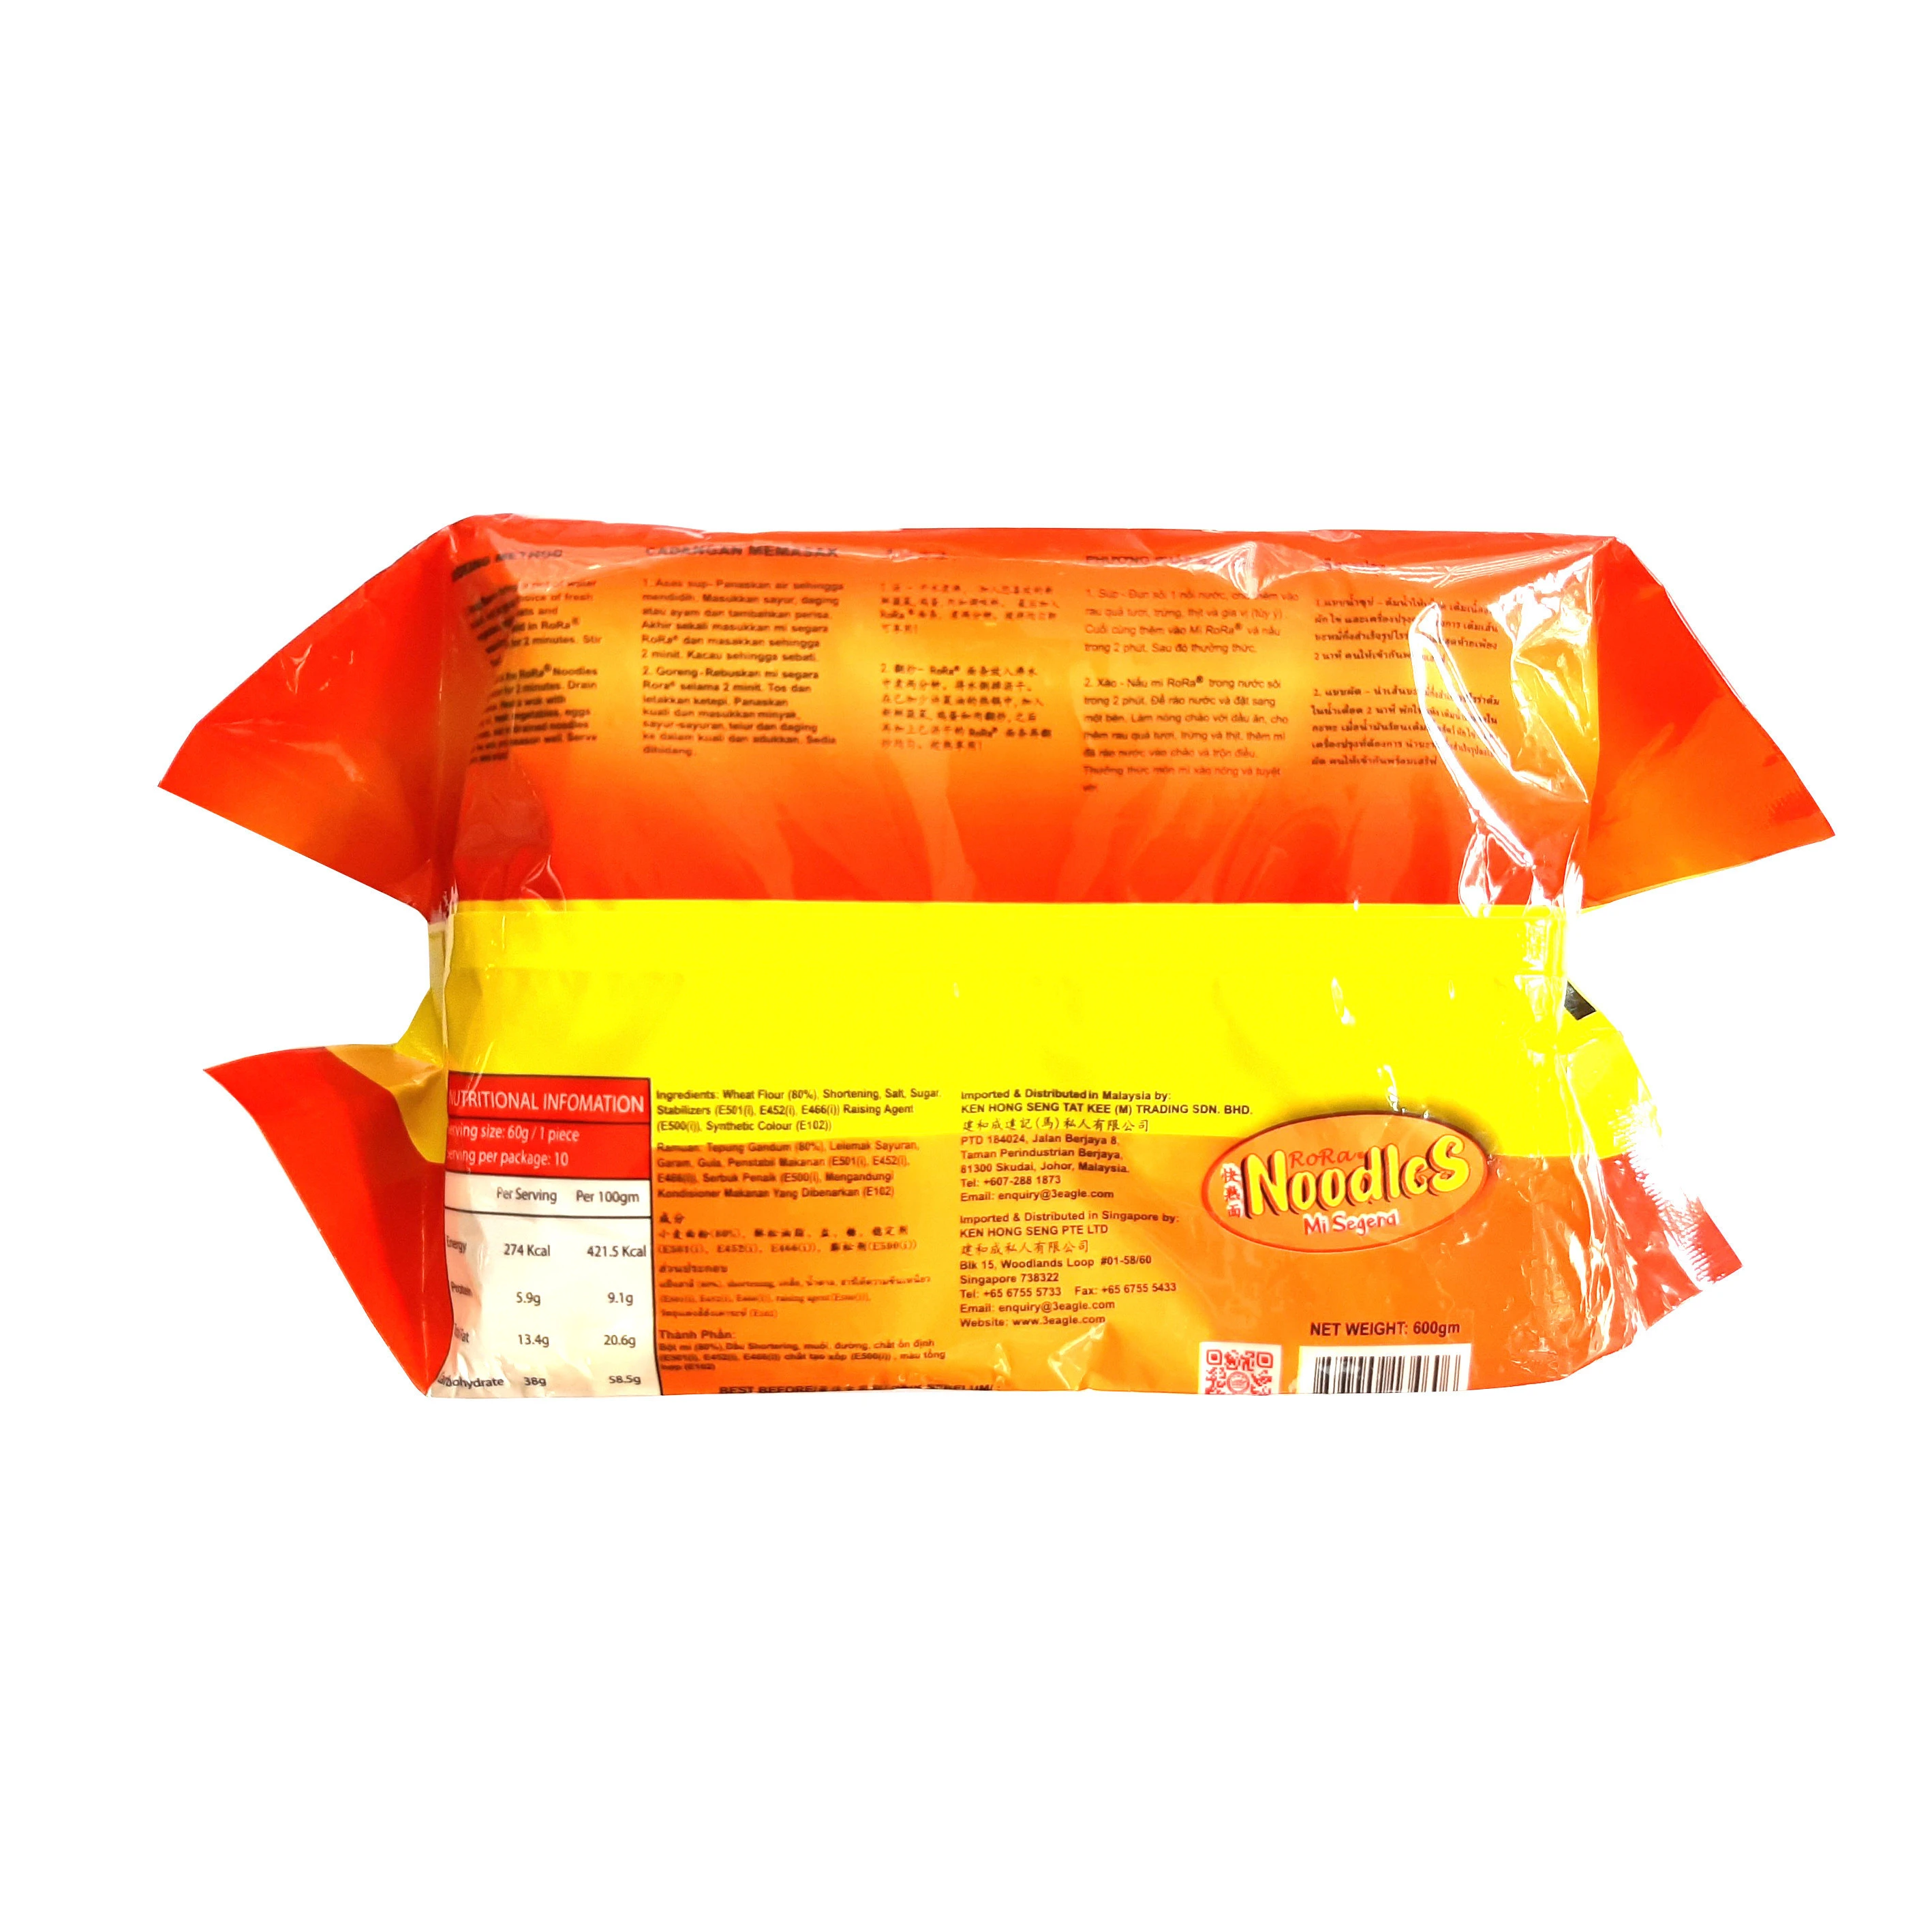 Plain Instant Noodles for Soup 20.6g/per 100gm Noodles % Fat Bag Packaging 0.6 Kg Normal Fried with 6 Months Shelf Life